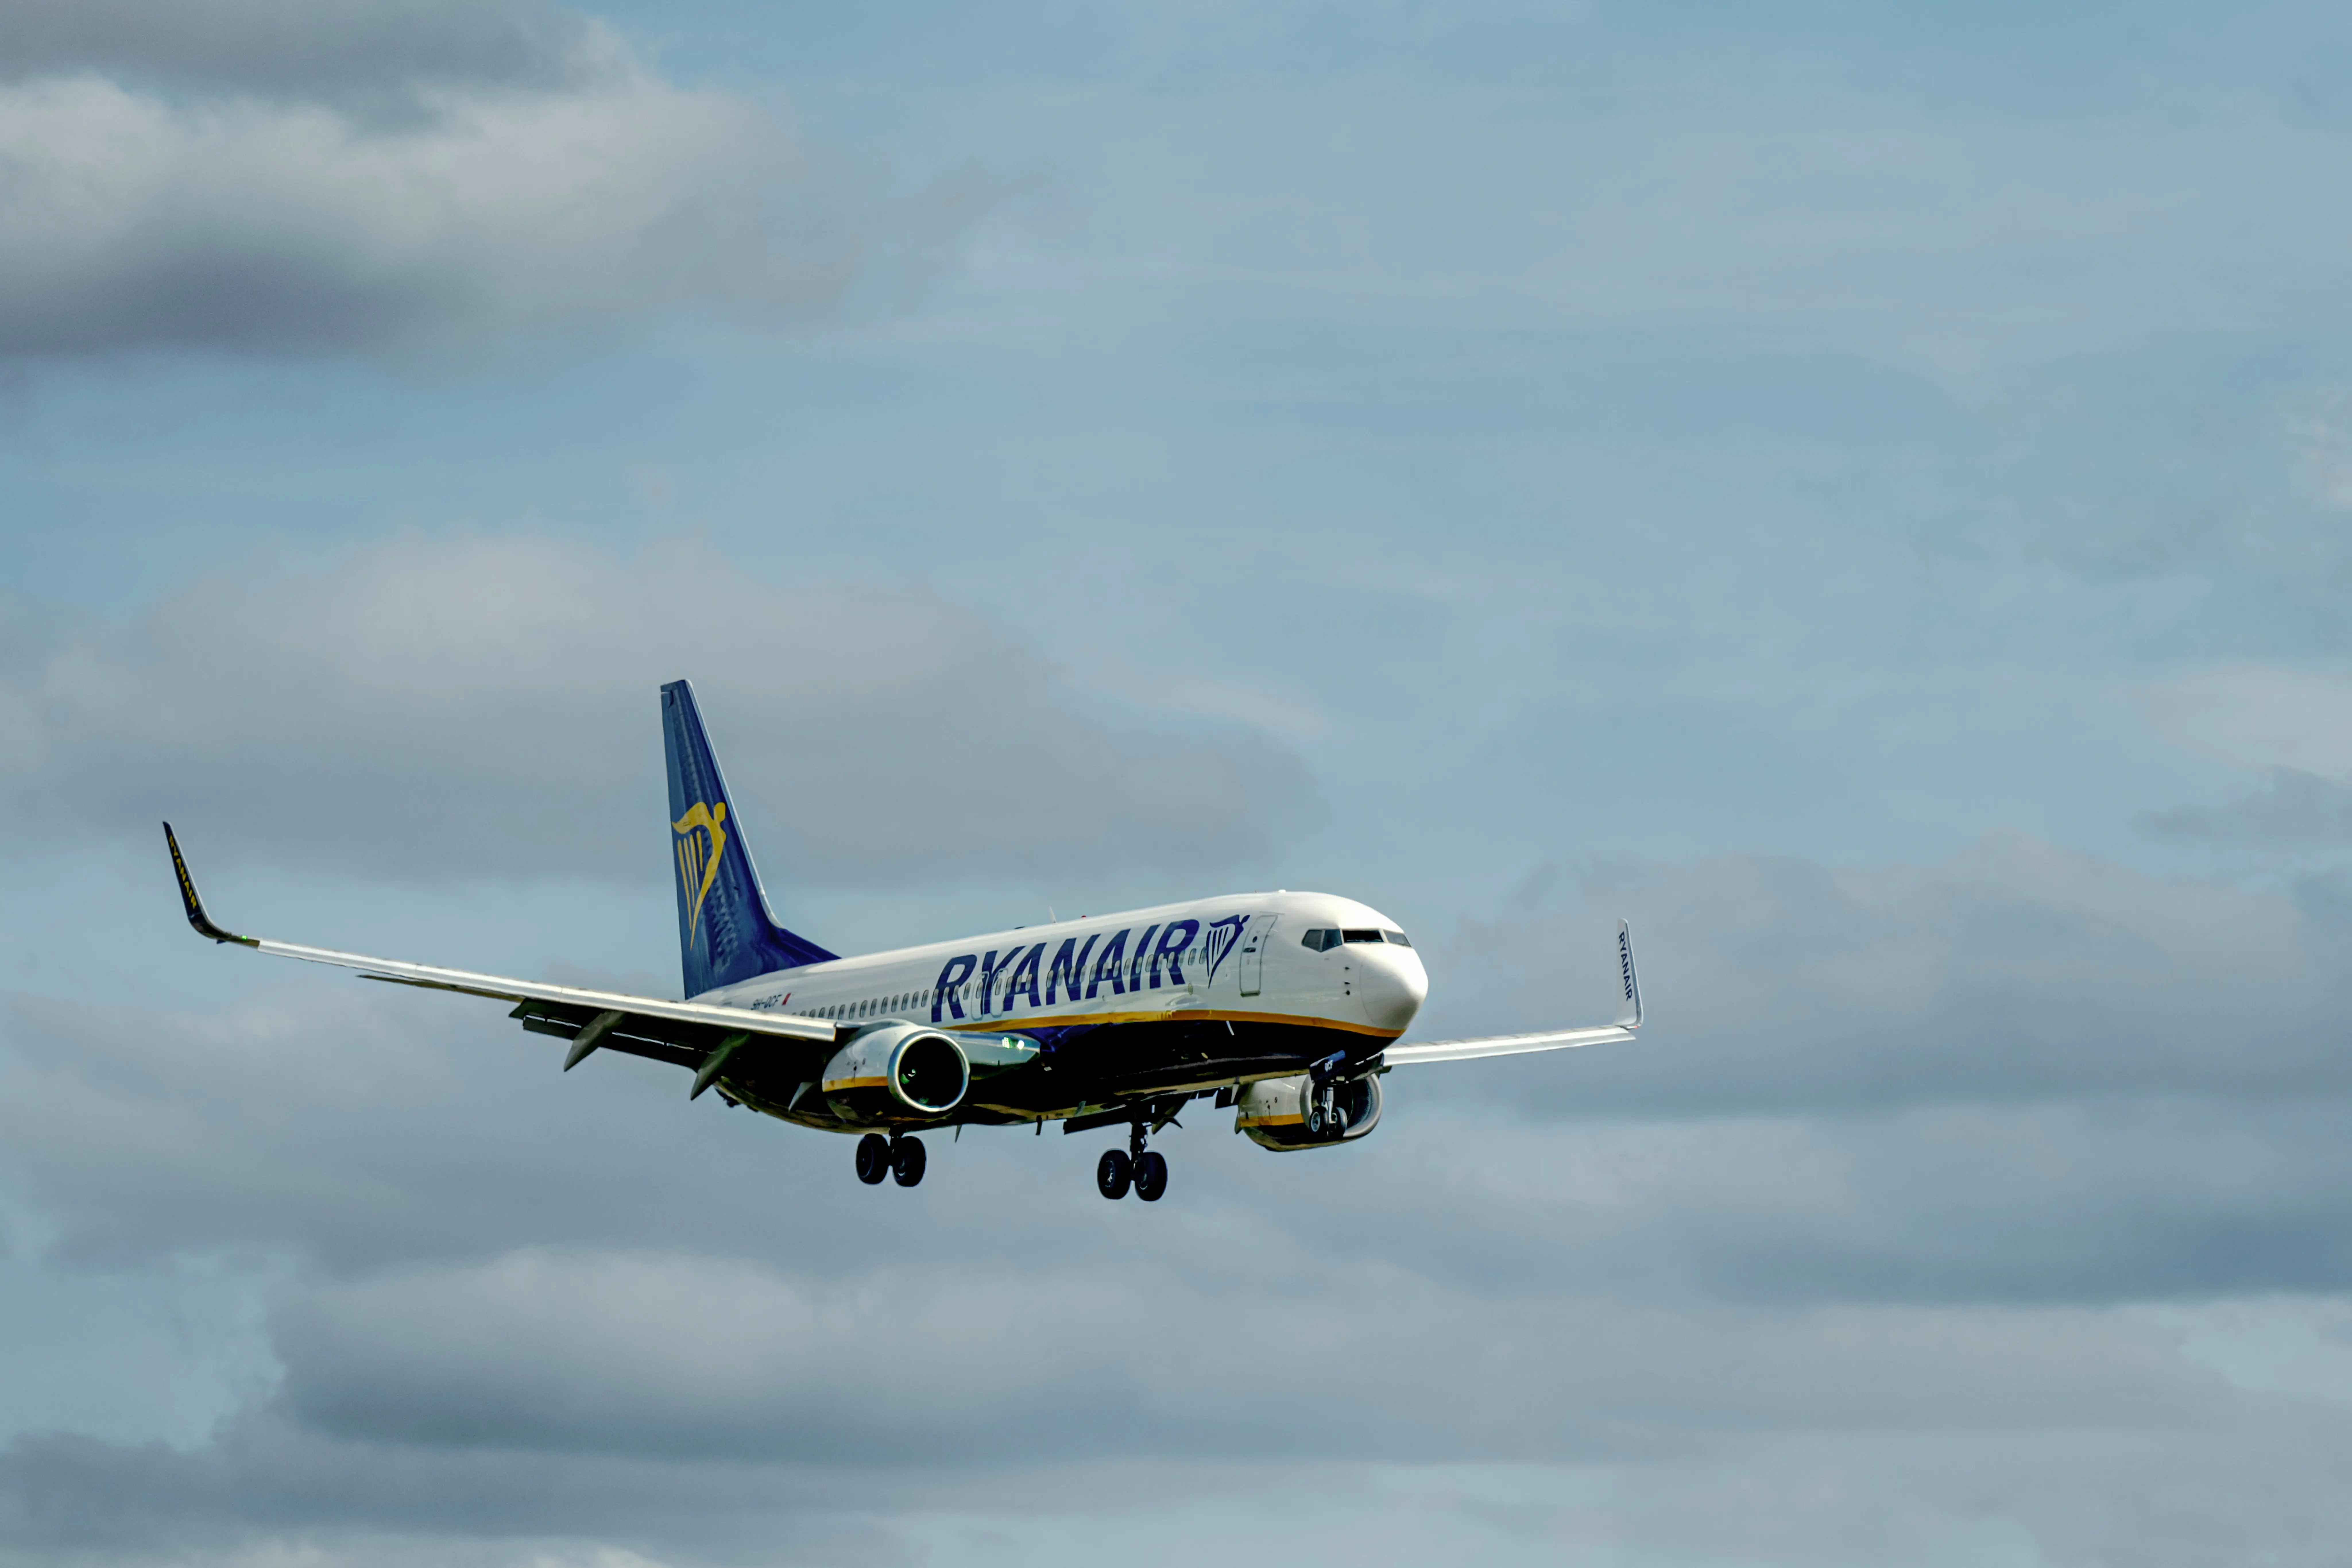 A RyanAir flight landing in Menorca (Credit: Pexels)